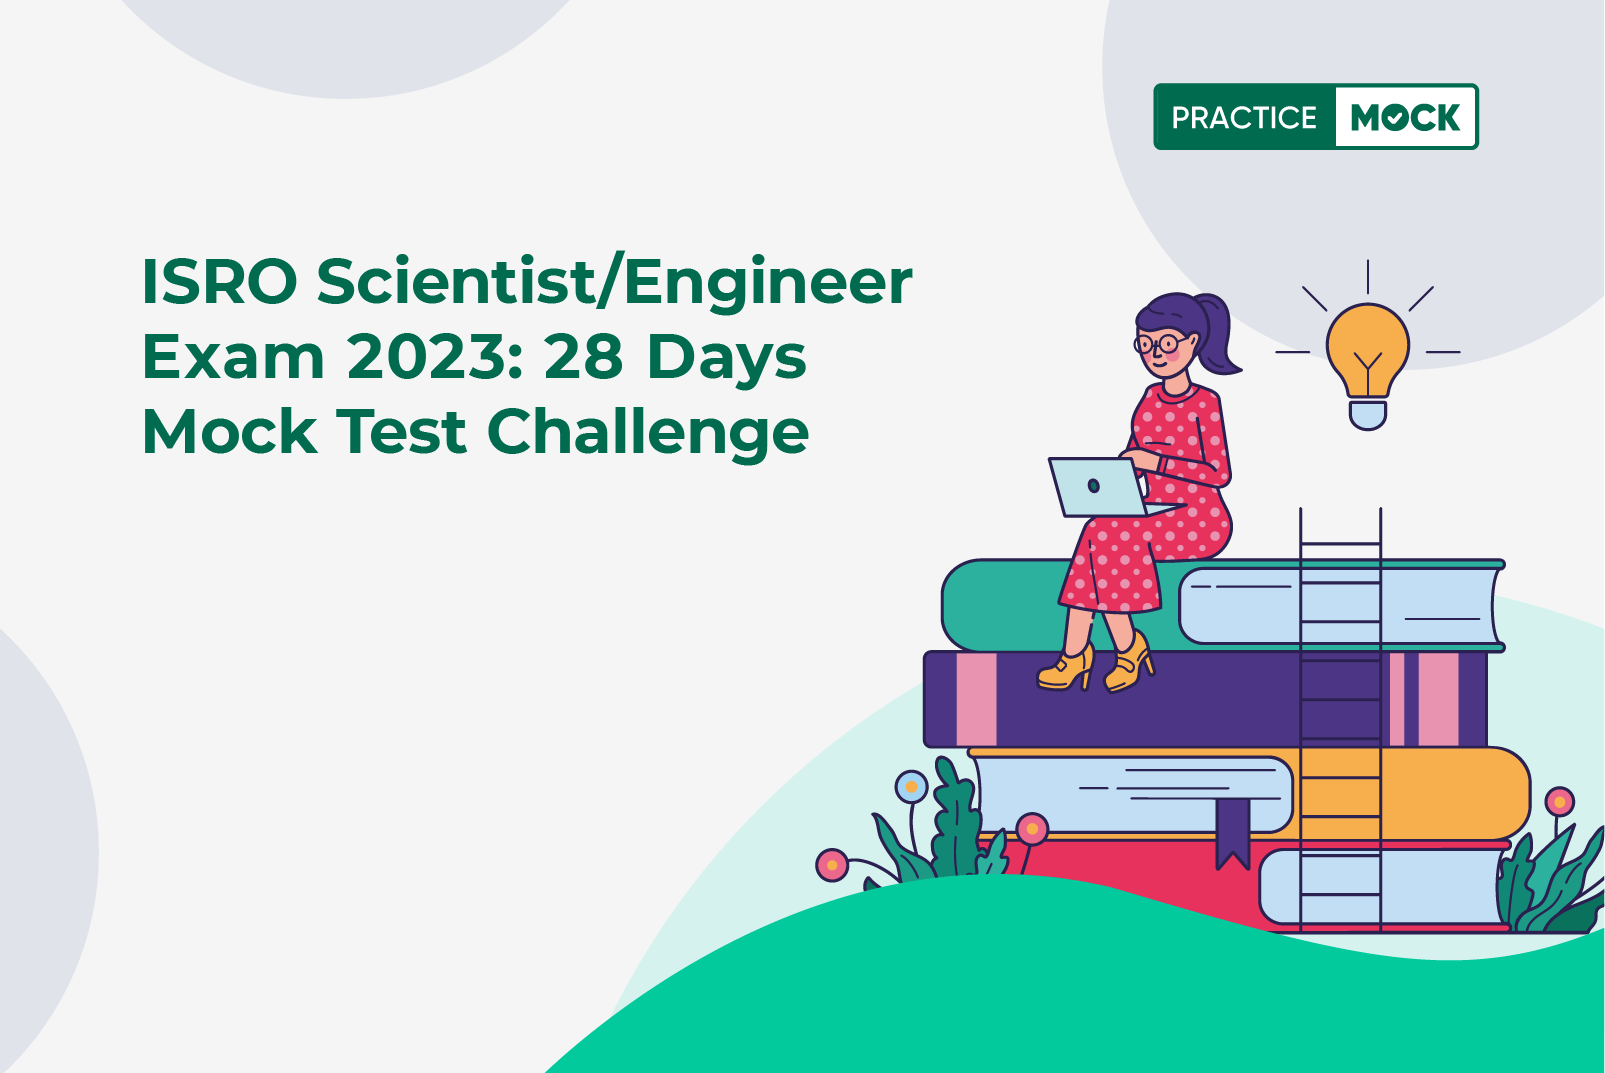 ISRO Scientist/Engineer Exam 2023: 28 Days Mock Test Challenge